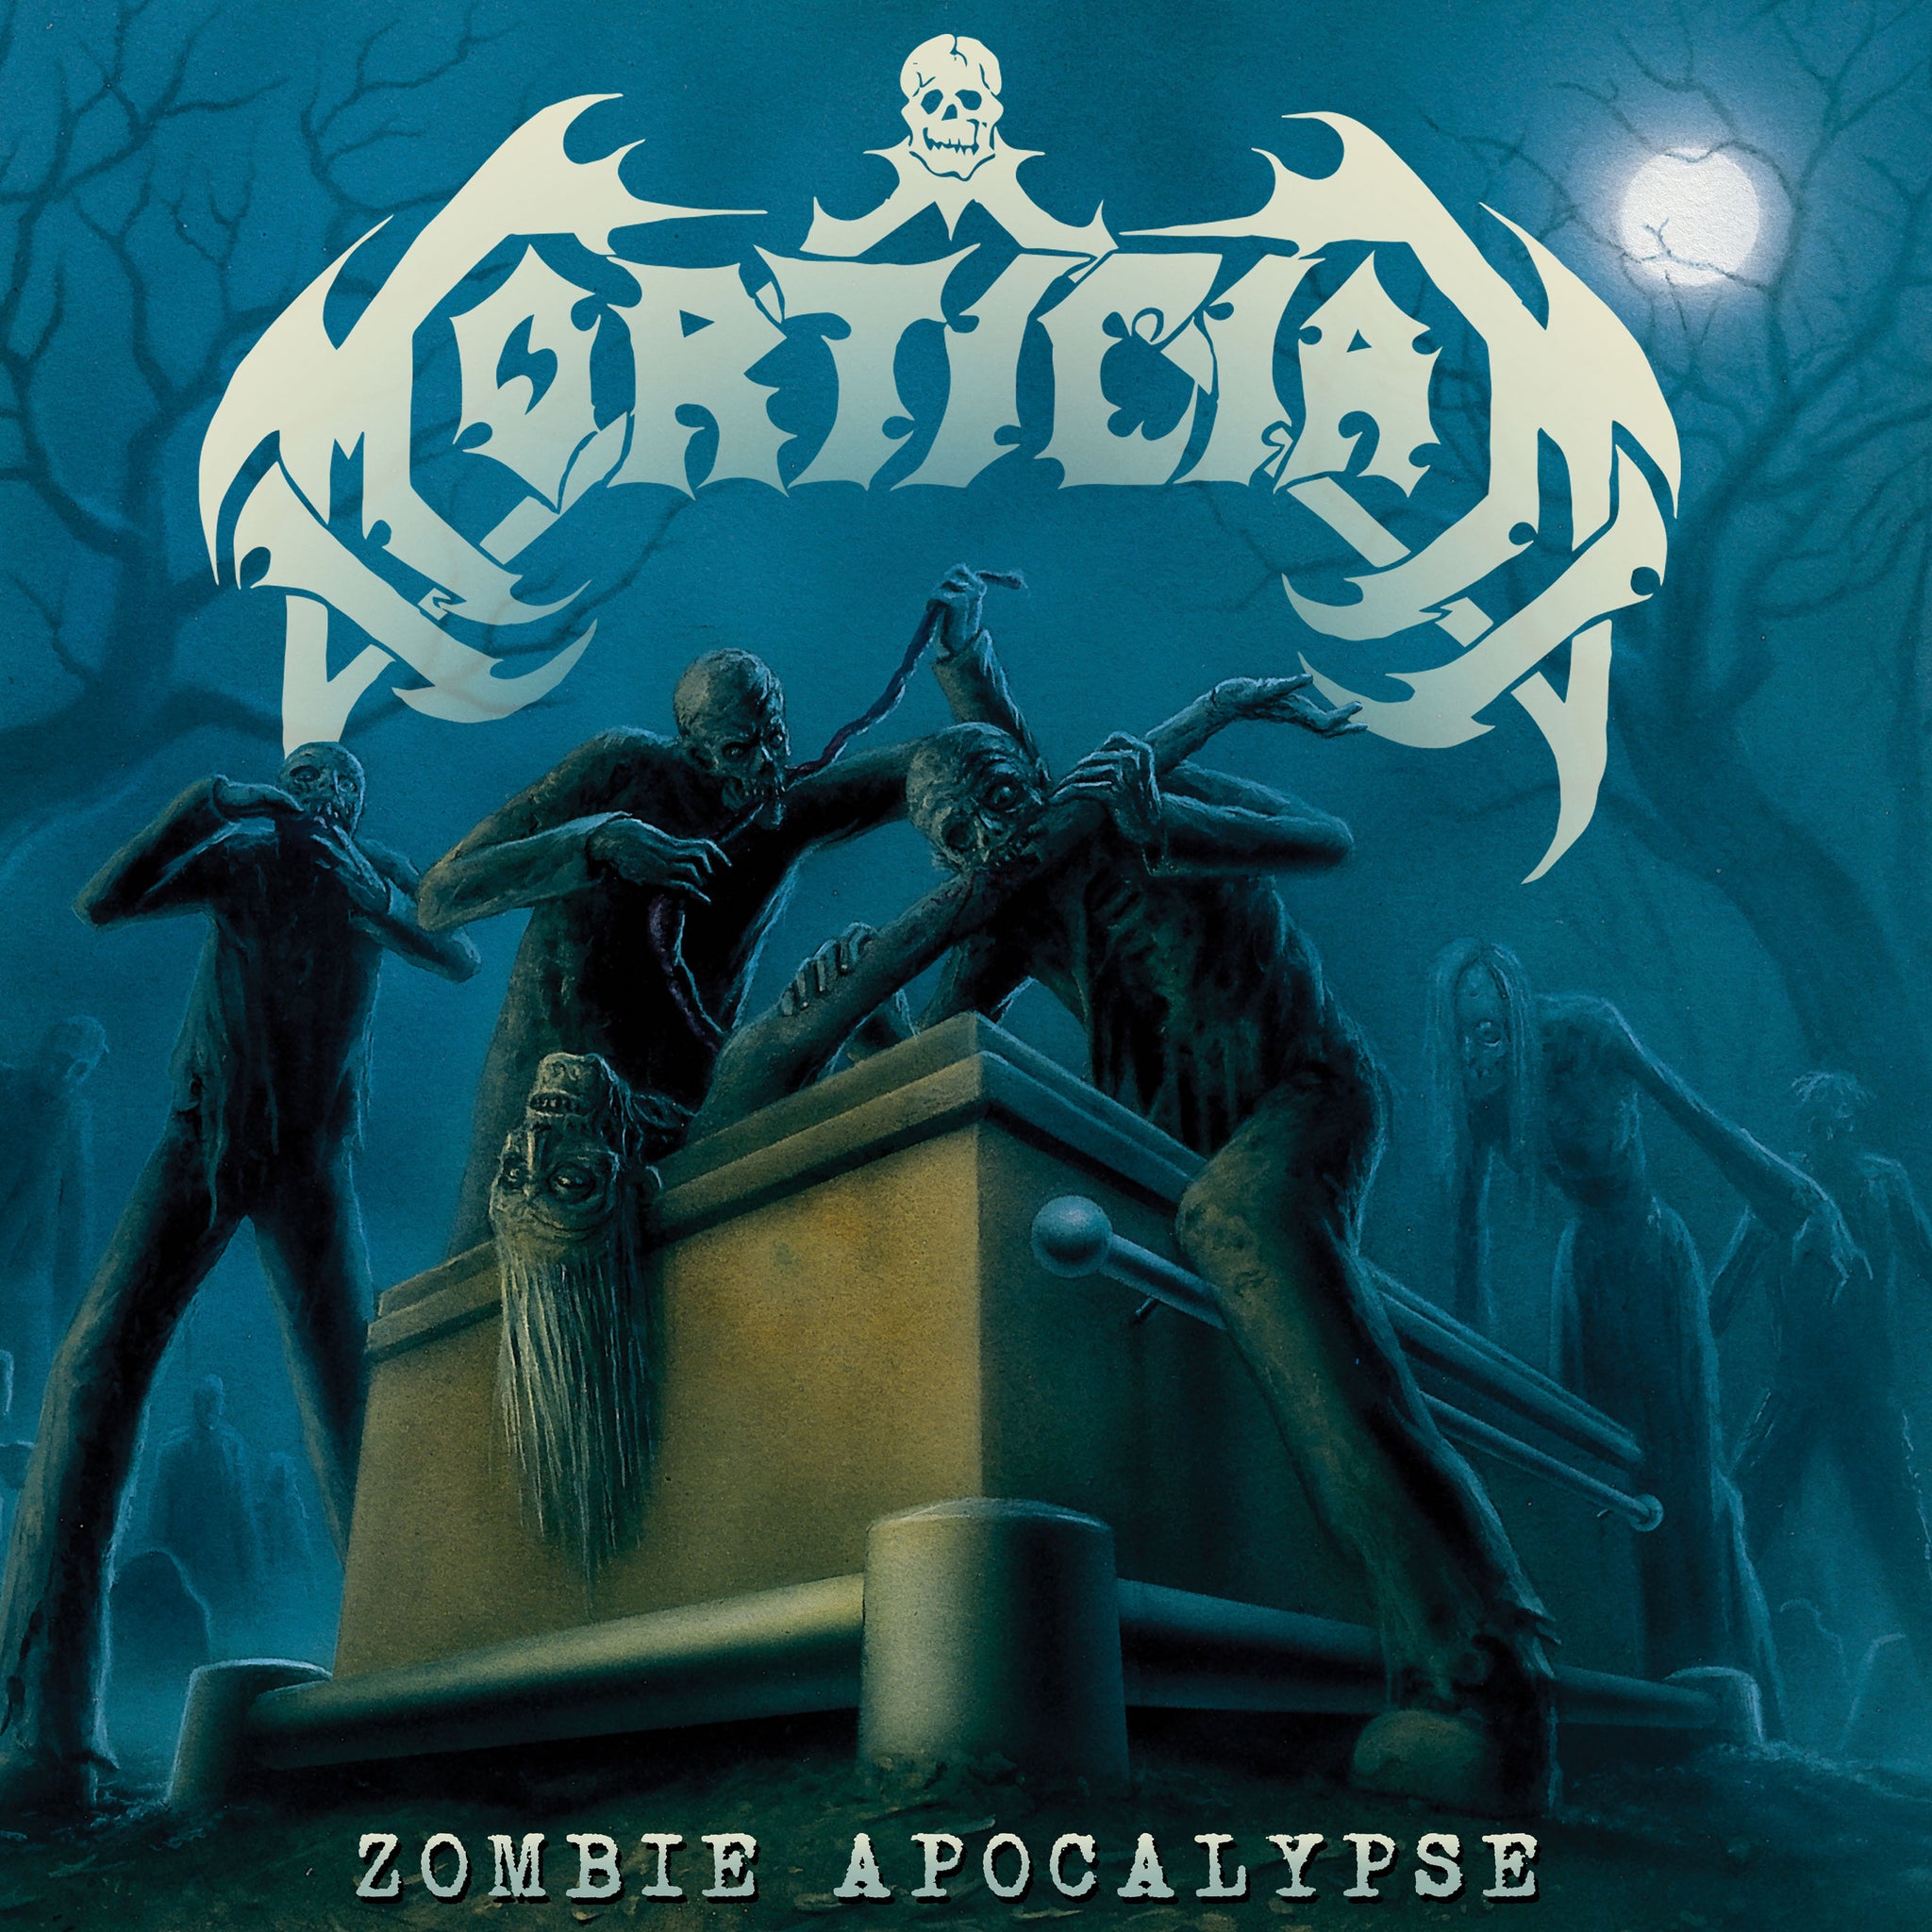 Mortician "Zombie Apocalypse" LP